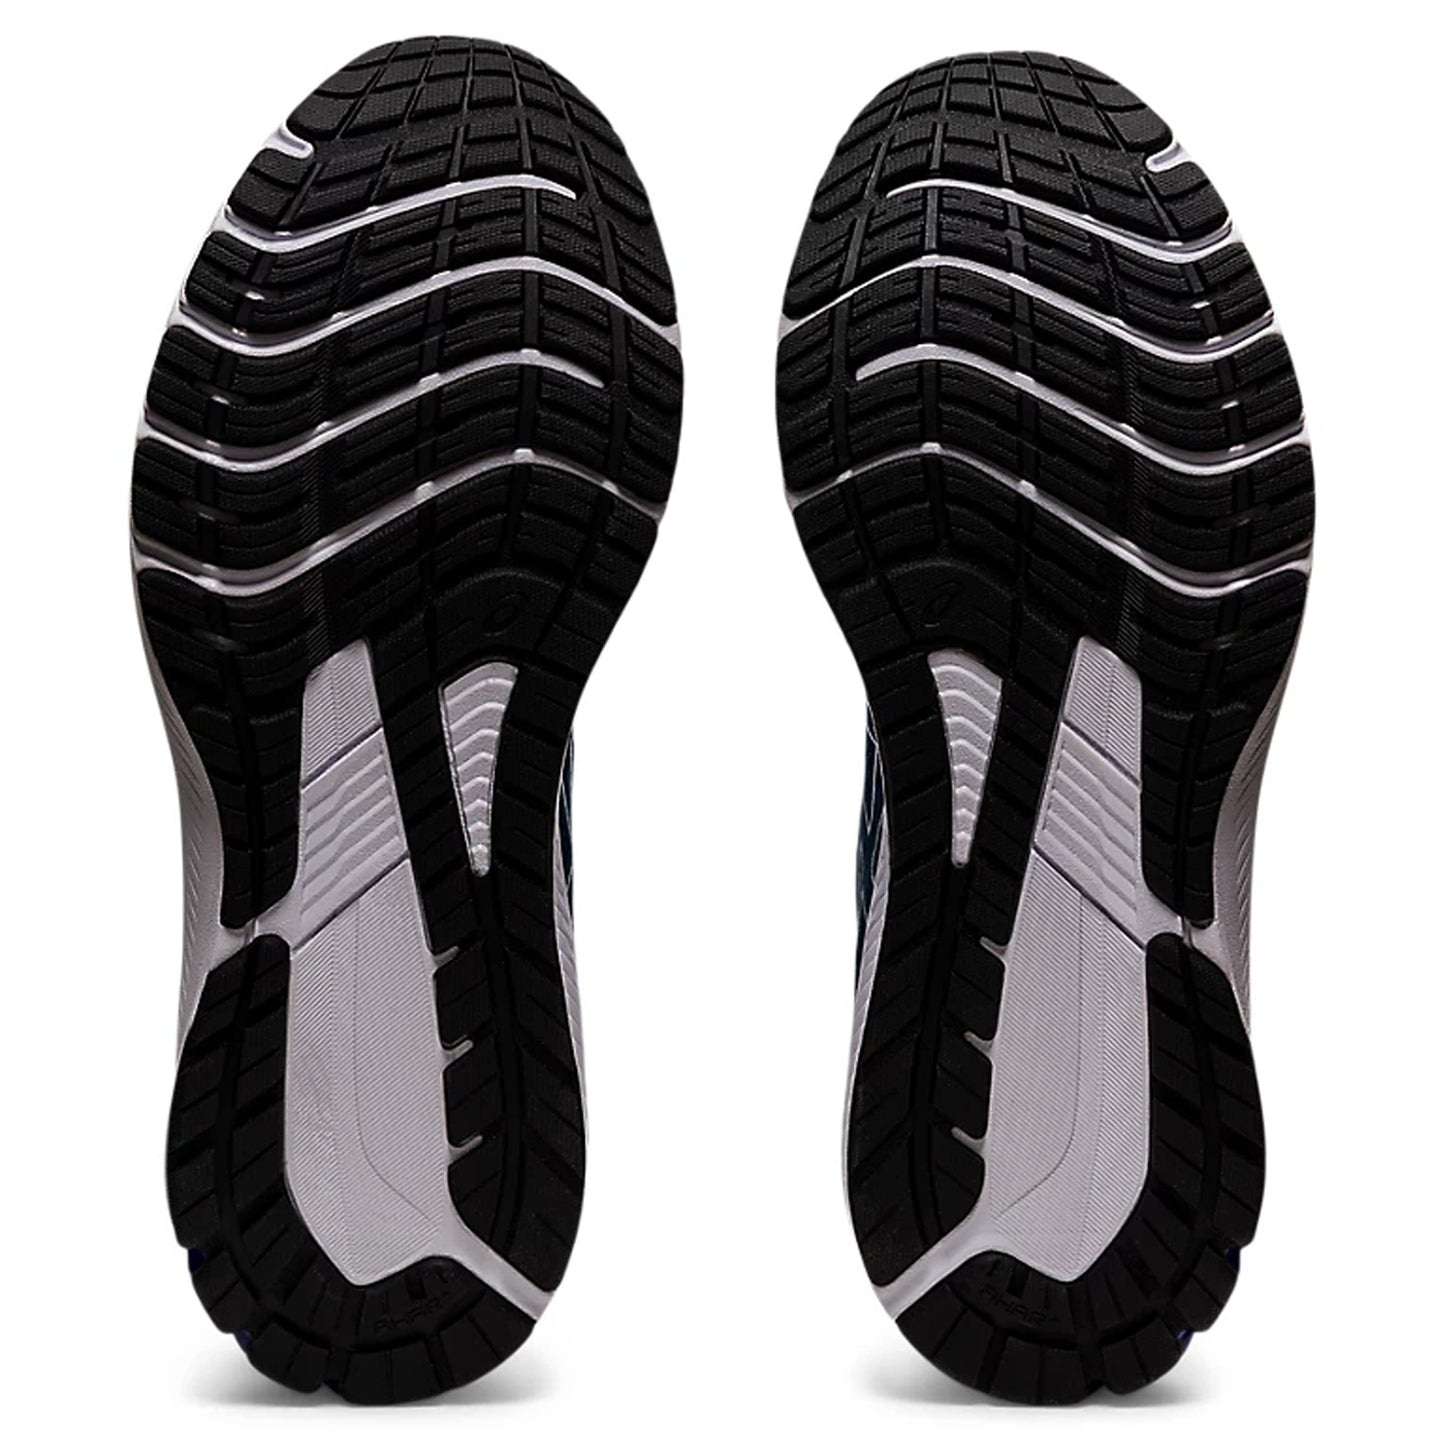 Asics GT-1000 11 Men's Running Shoes - Best Price online Prokicksports.com